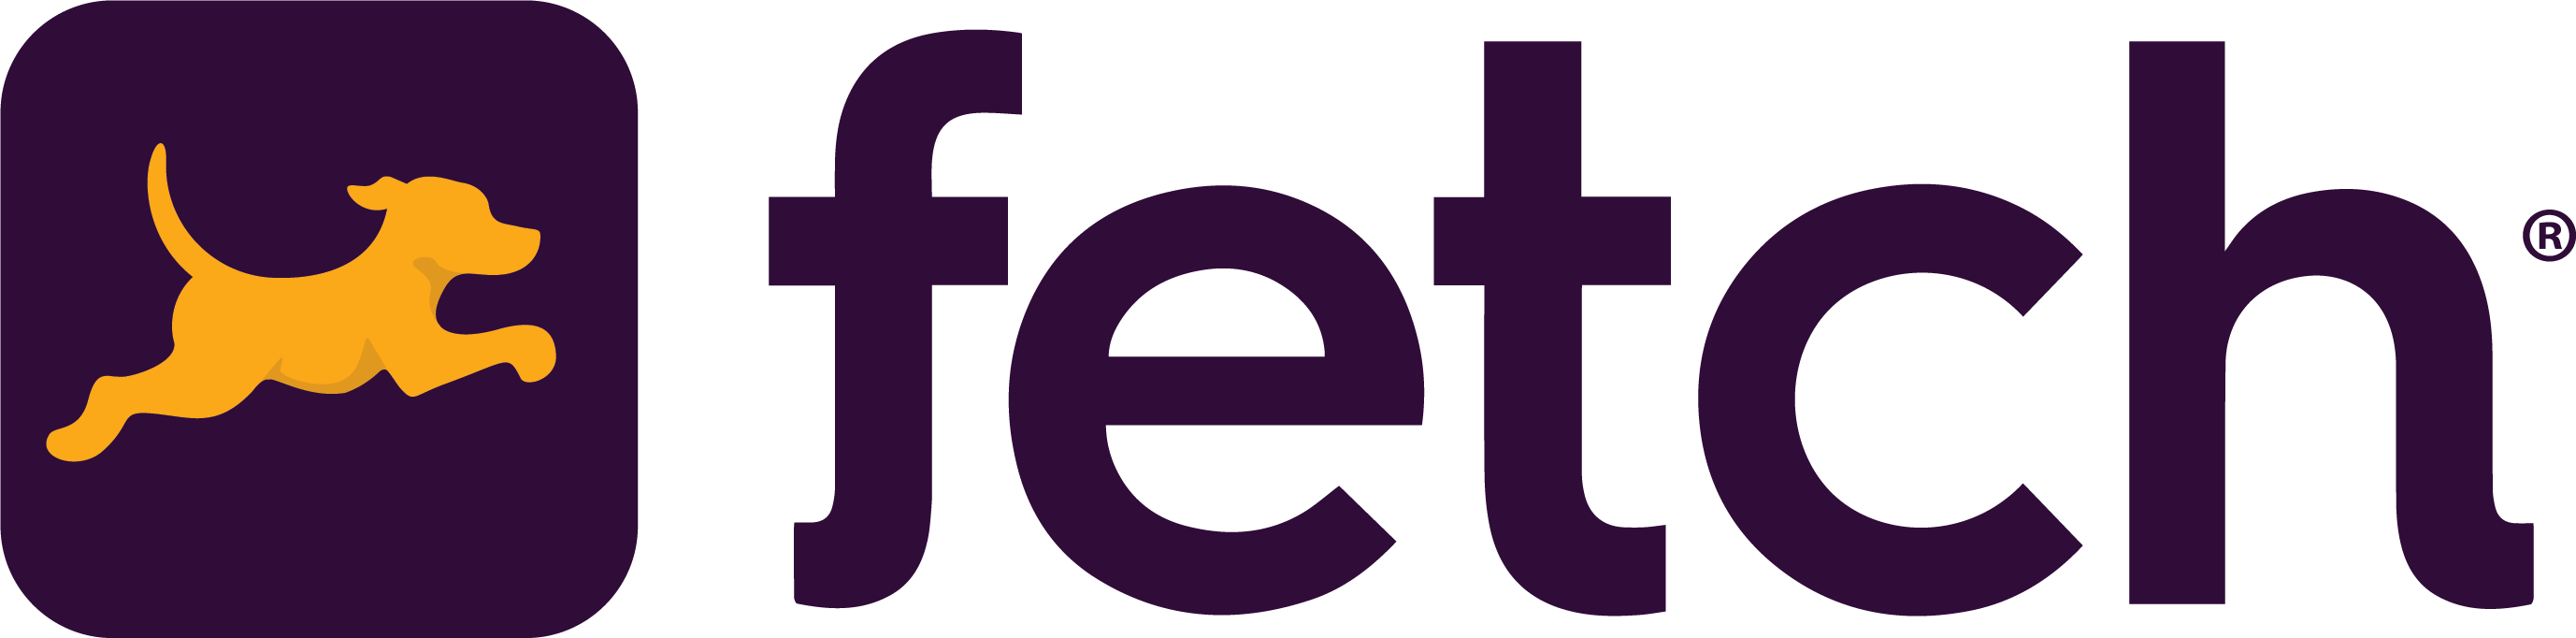 Vision Fund investment portfolio company Fetch's logo